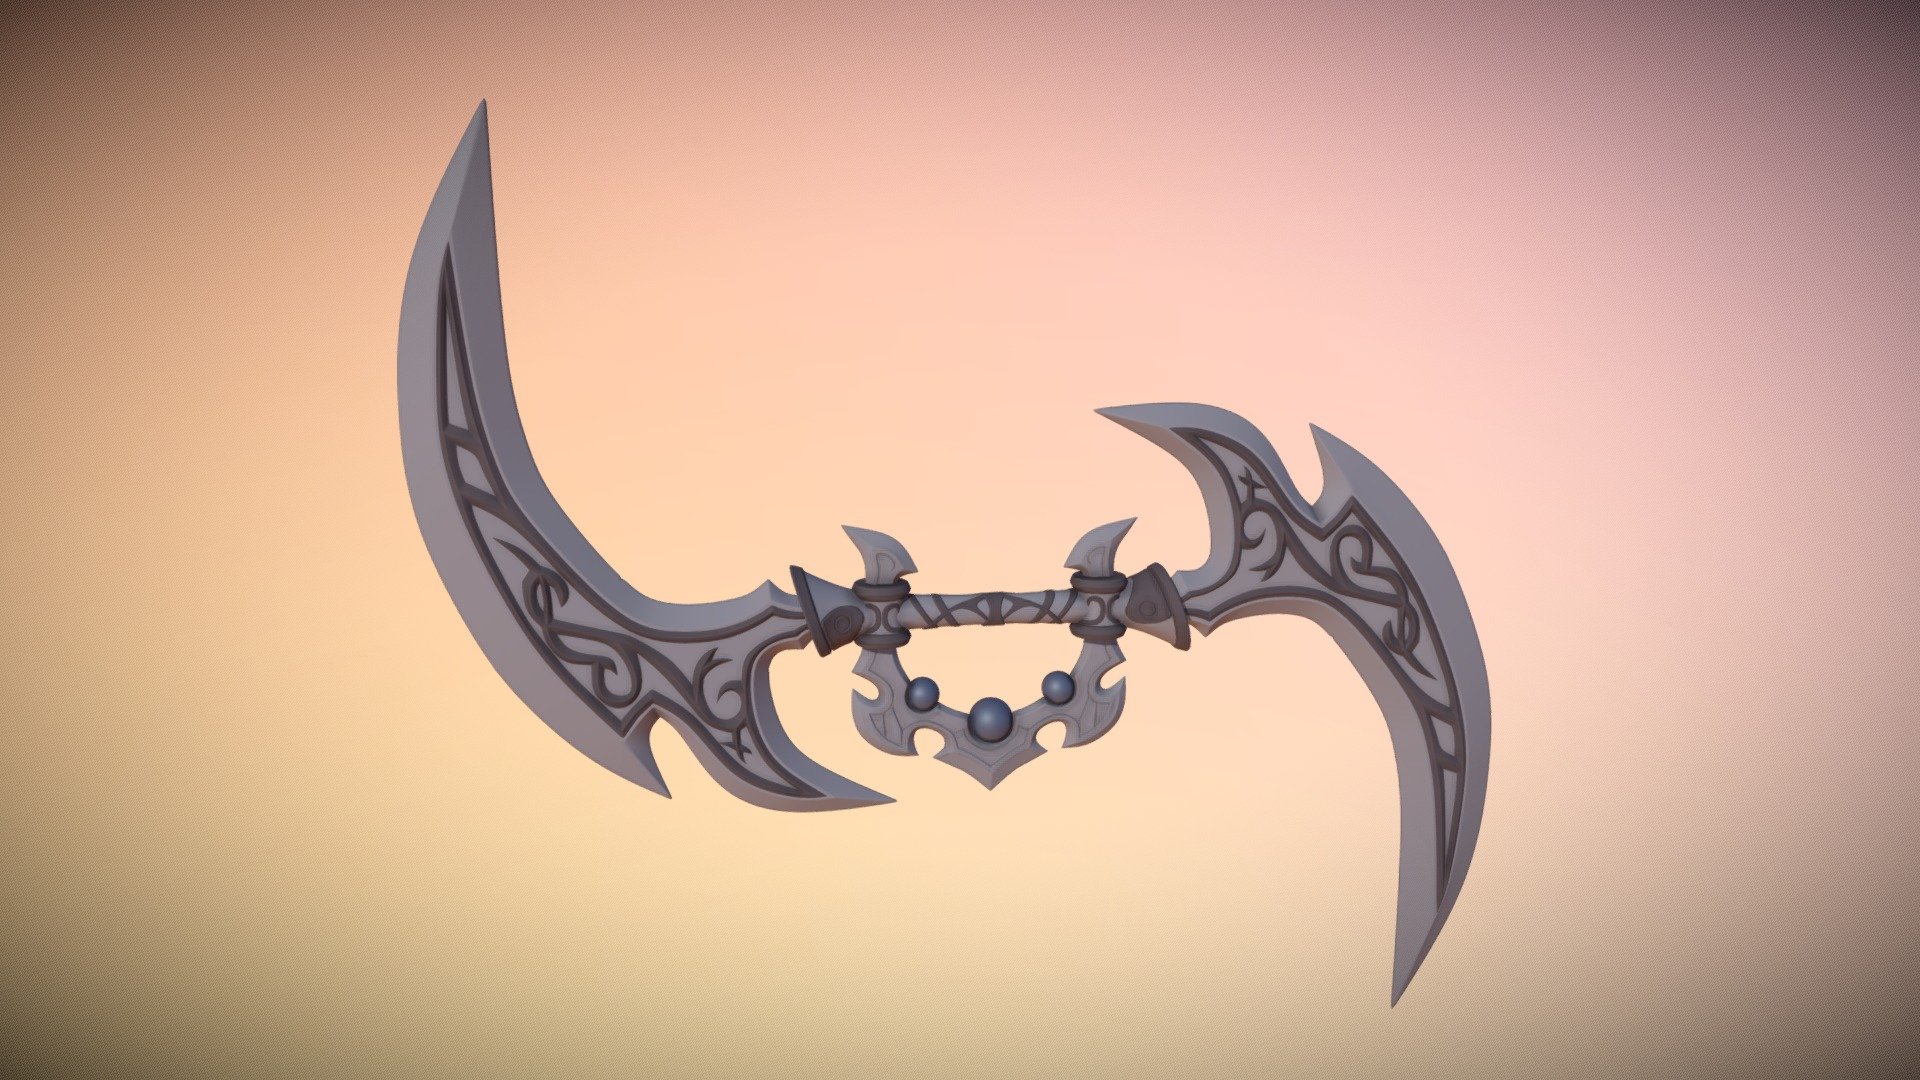 Night Warrior Tyrande Weapon - World of Warcraft
For 3D Printing - Night Warrior Tyrande Weapon - World of Warcraft - 3D model by Marina H (@Darrkarra) 3d model